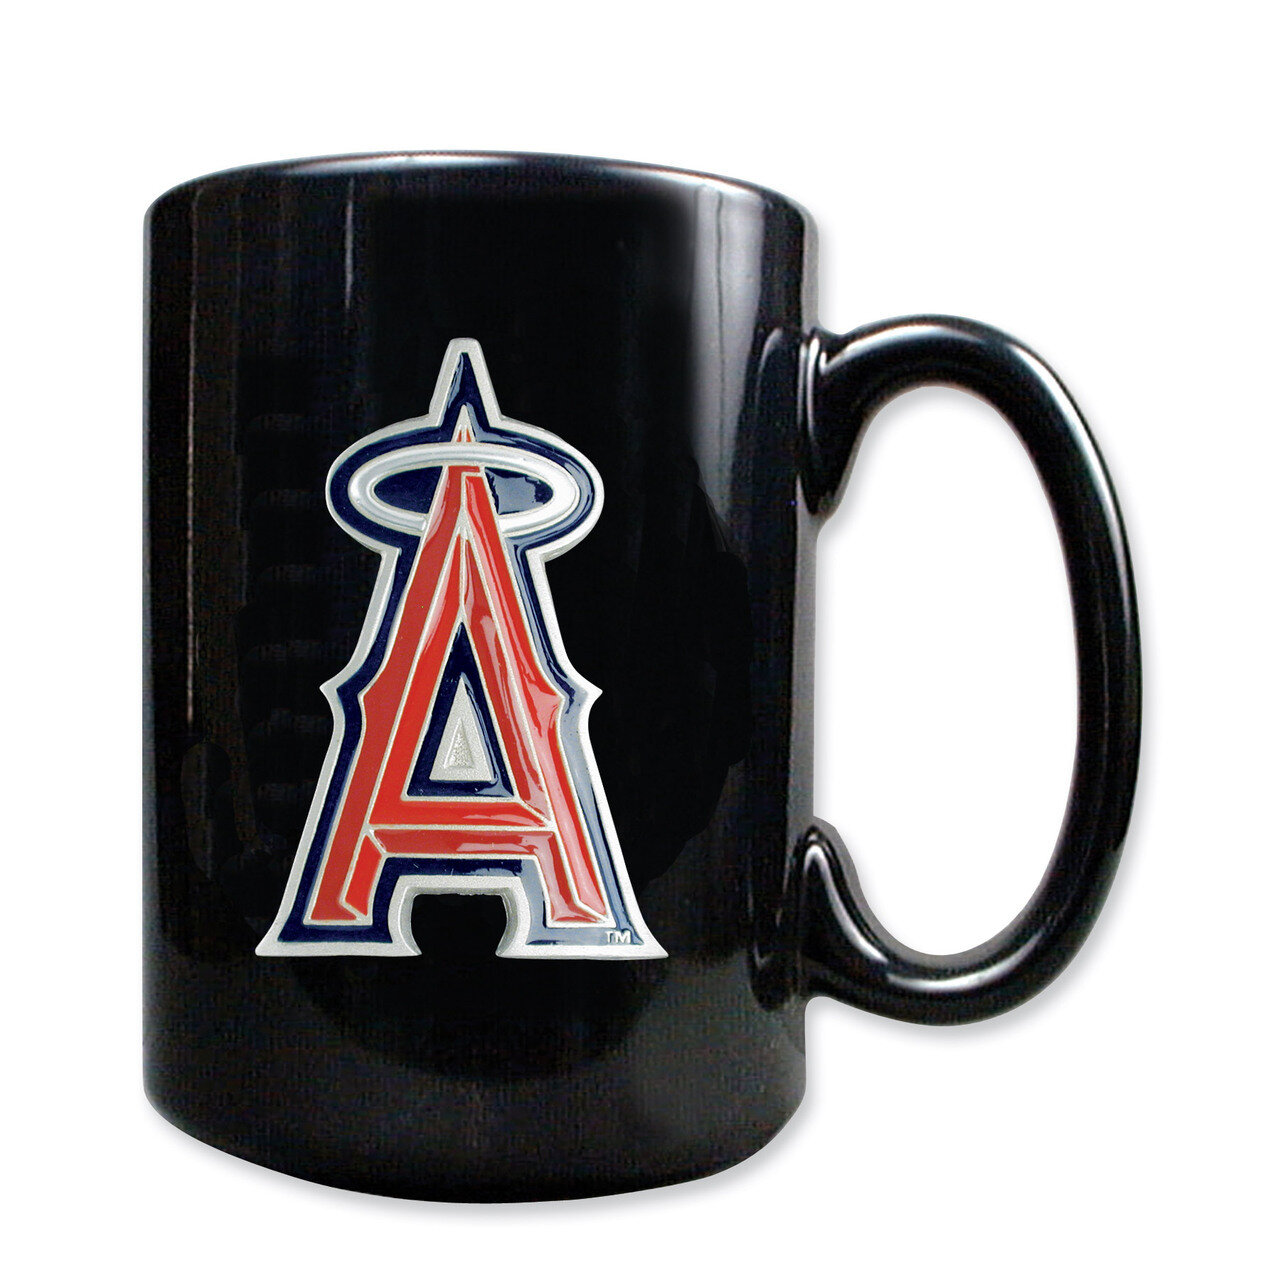 Anaheim Angels 15oz Black Ceramic Mug GC783